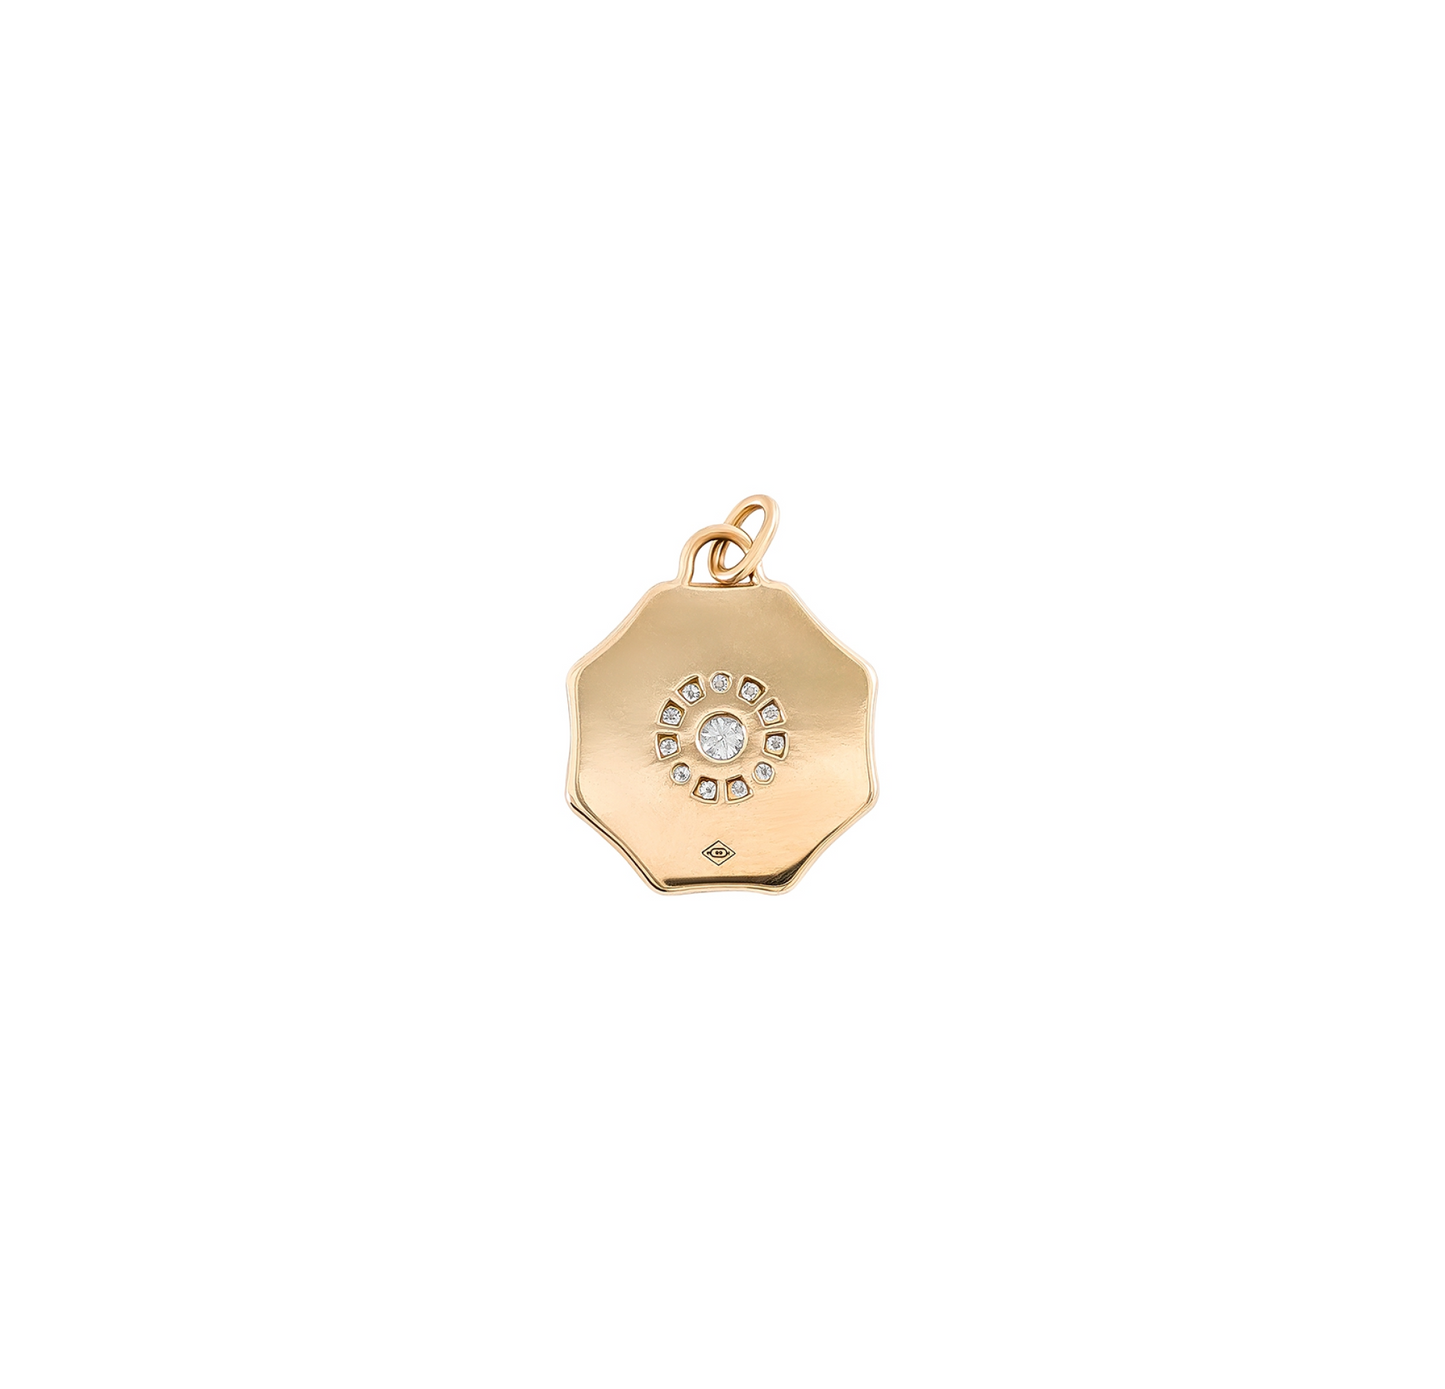 Petite Okto medal, diamond, and yellow gold